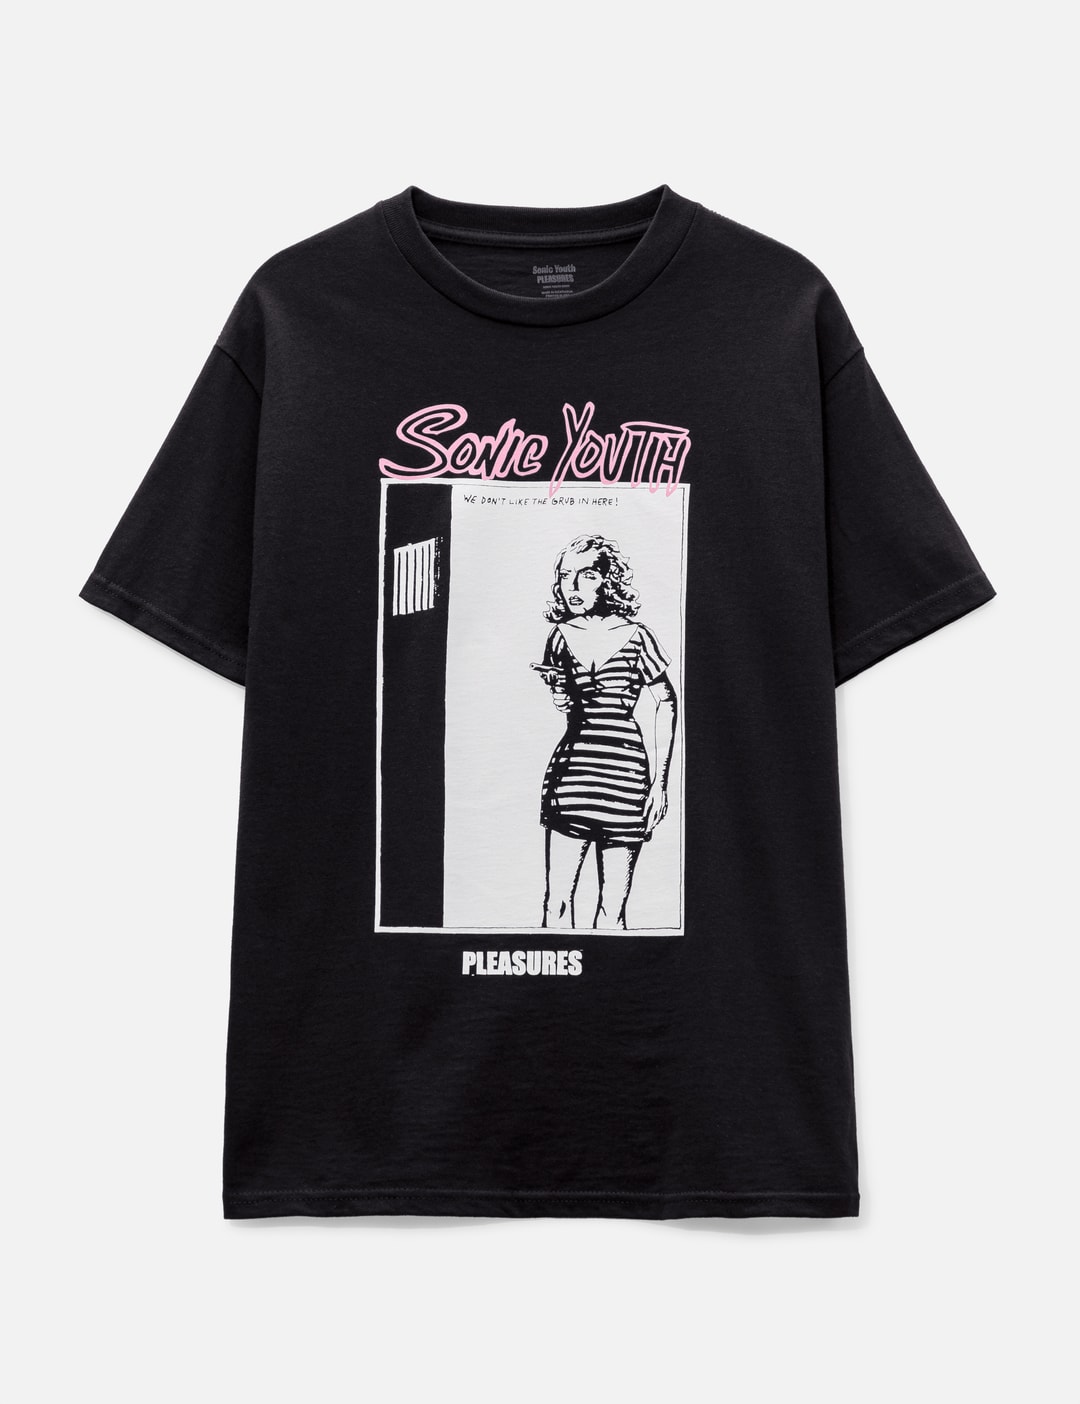 Pleasures - PLEASURES x Sonic Youth Grub T-shirt | HBX - Globally ...